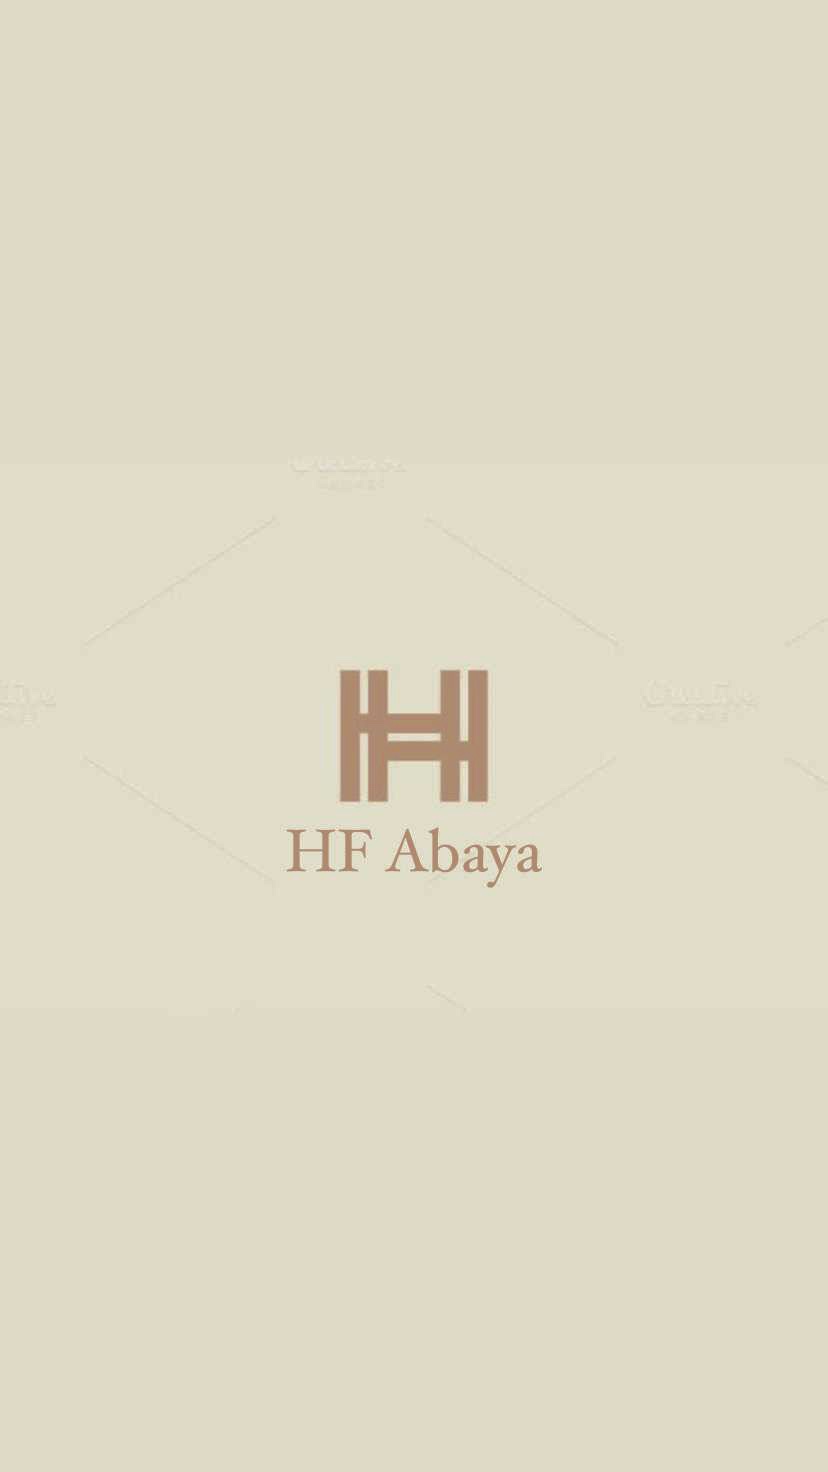 HF abaya